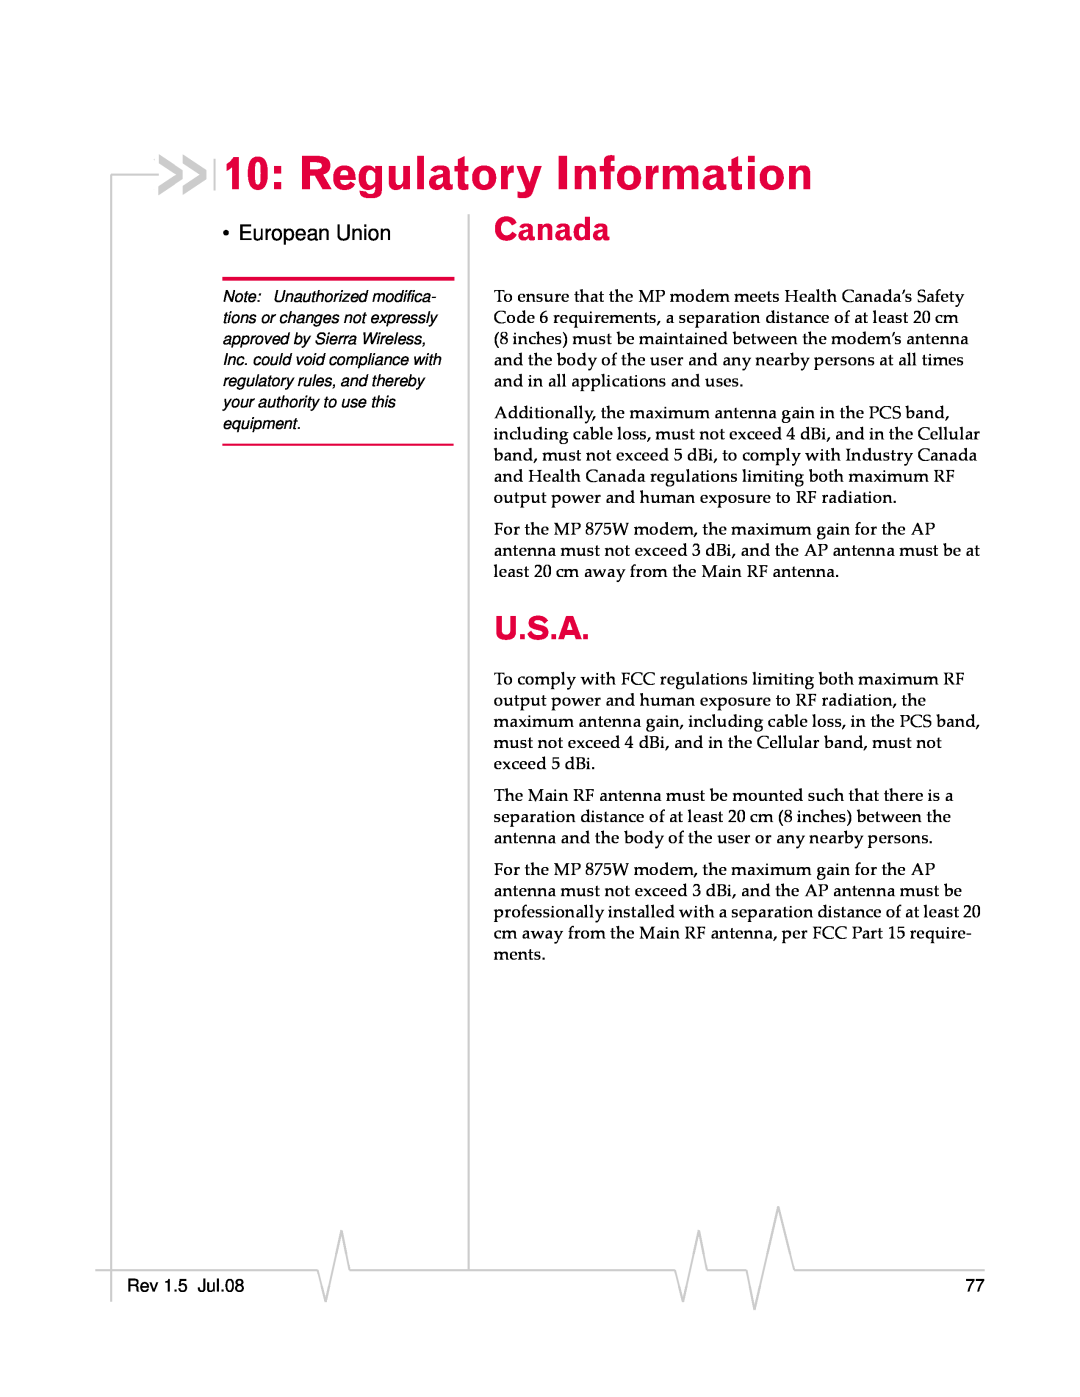 Sierra Wireless MP 880W manual Regulatory Information, Canada, U.S.A 